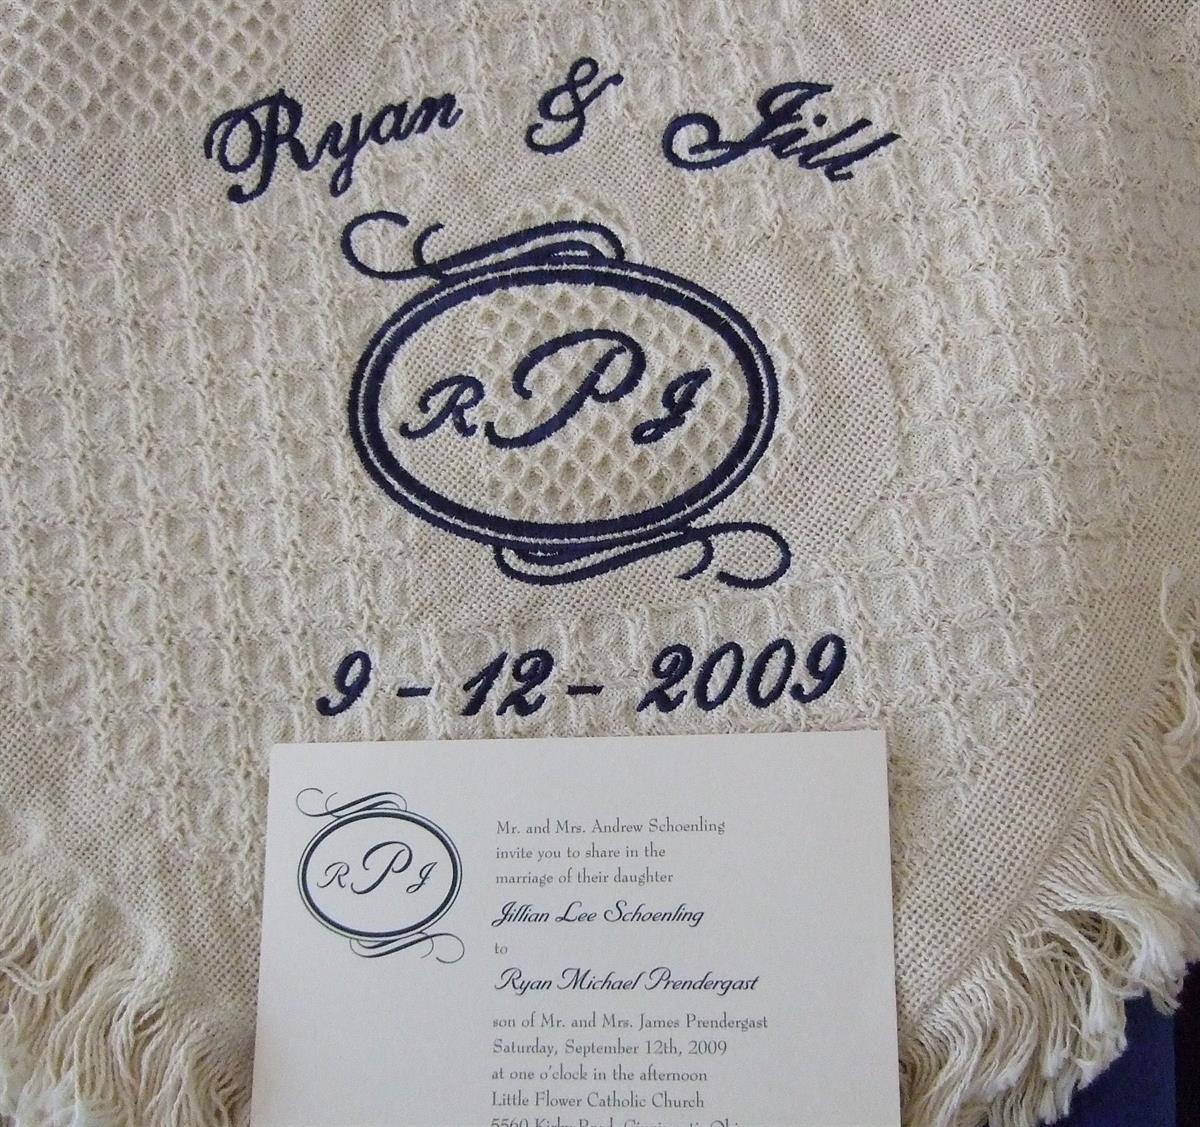 Monogram from wedding invitaion on blanket